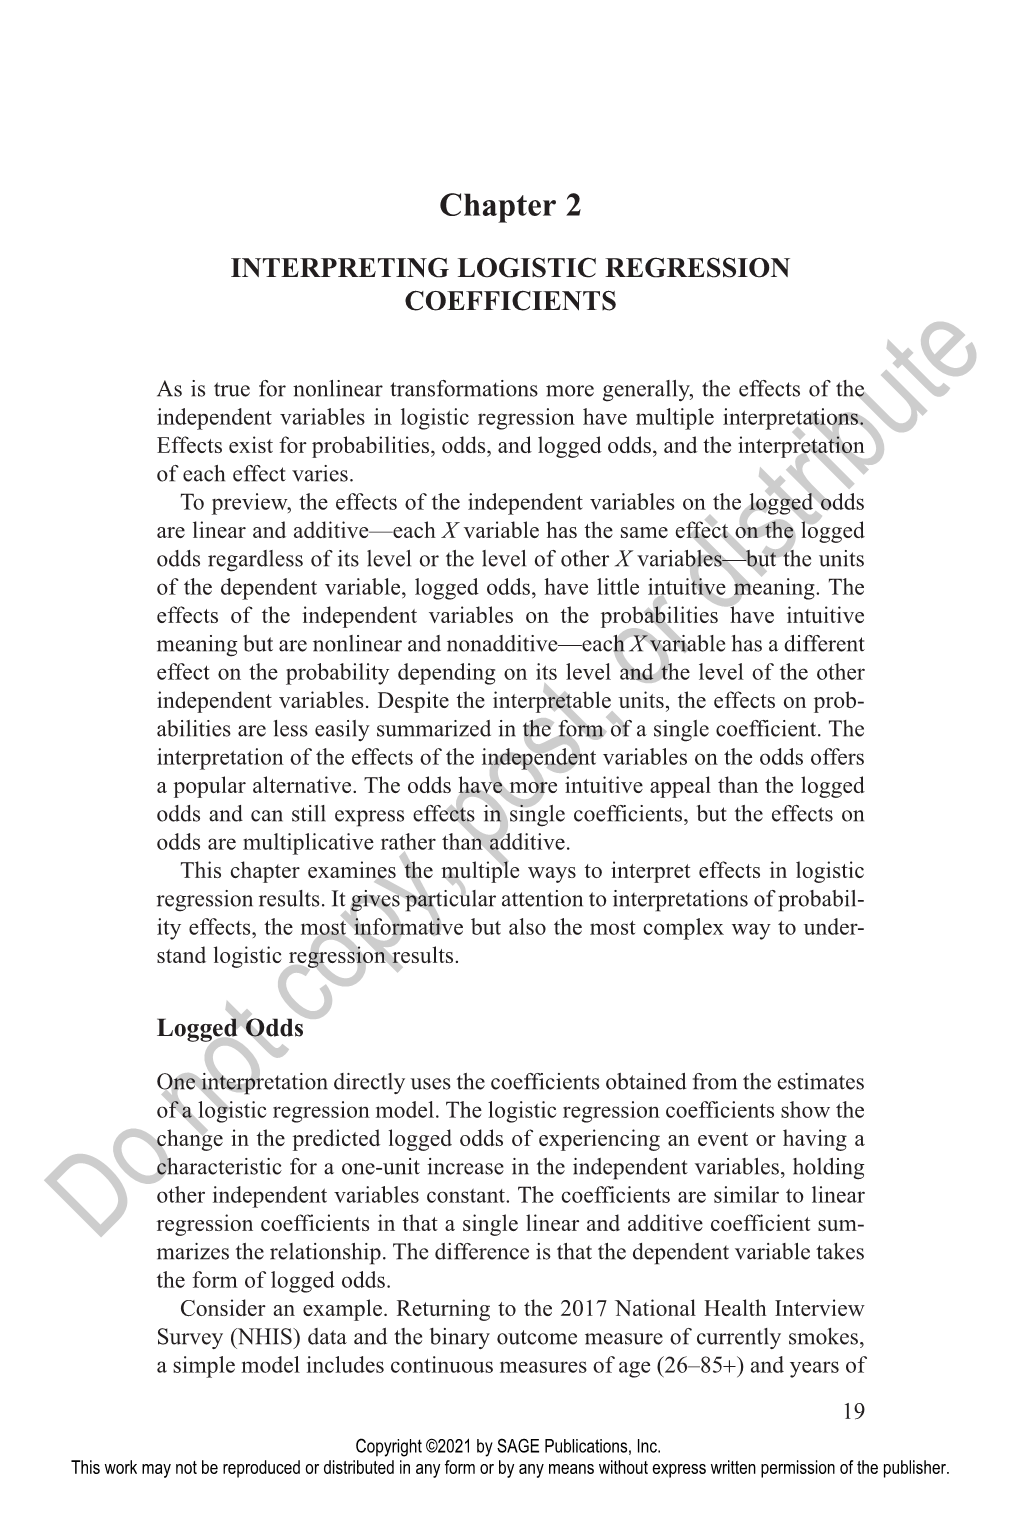 Chapter 2: Interpreting Logistic Regression Coefficients